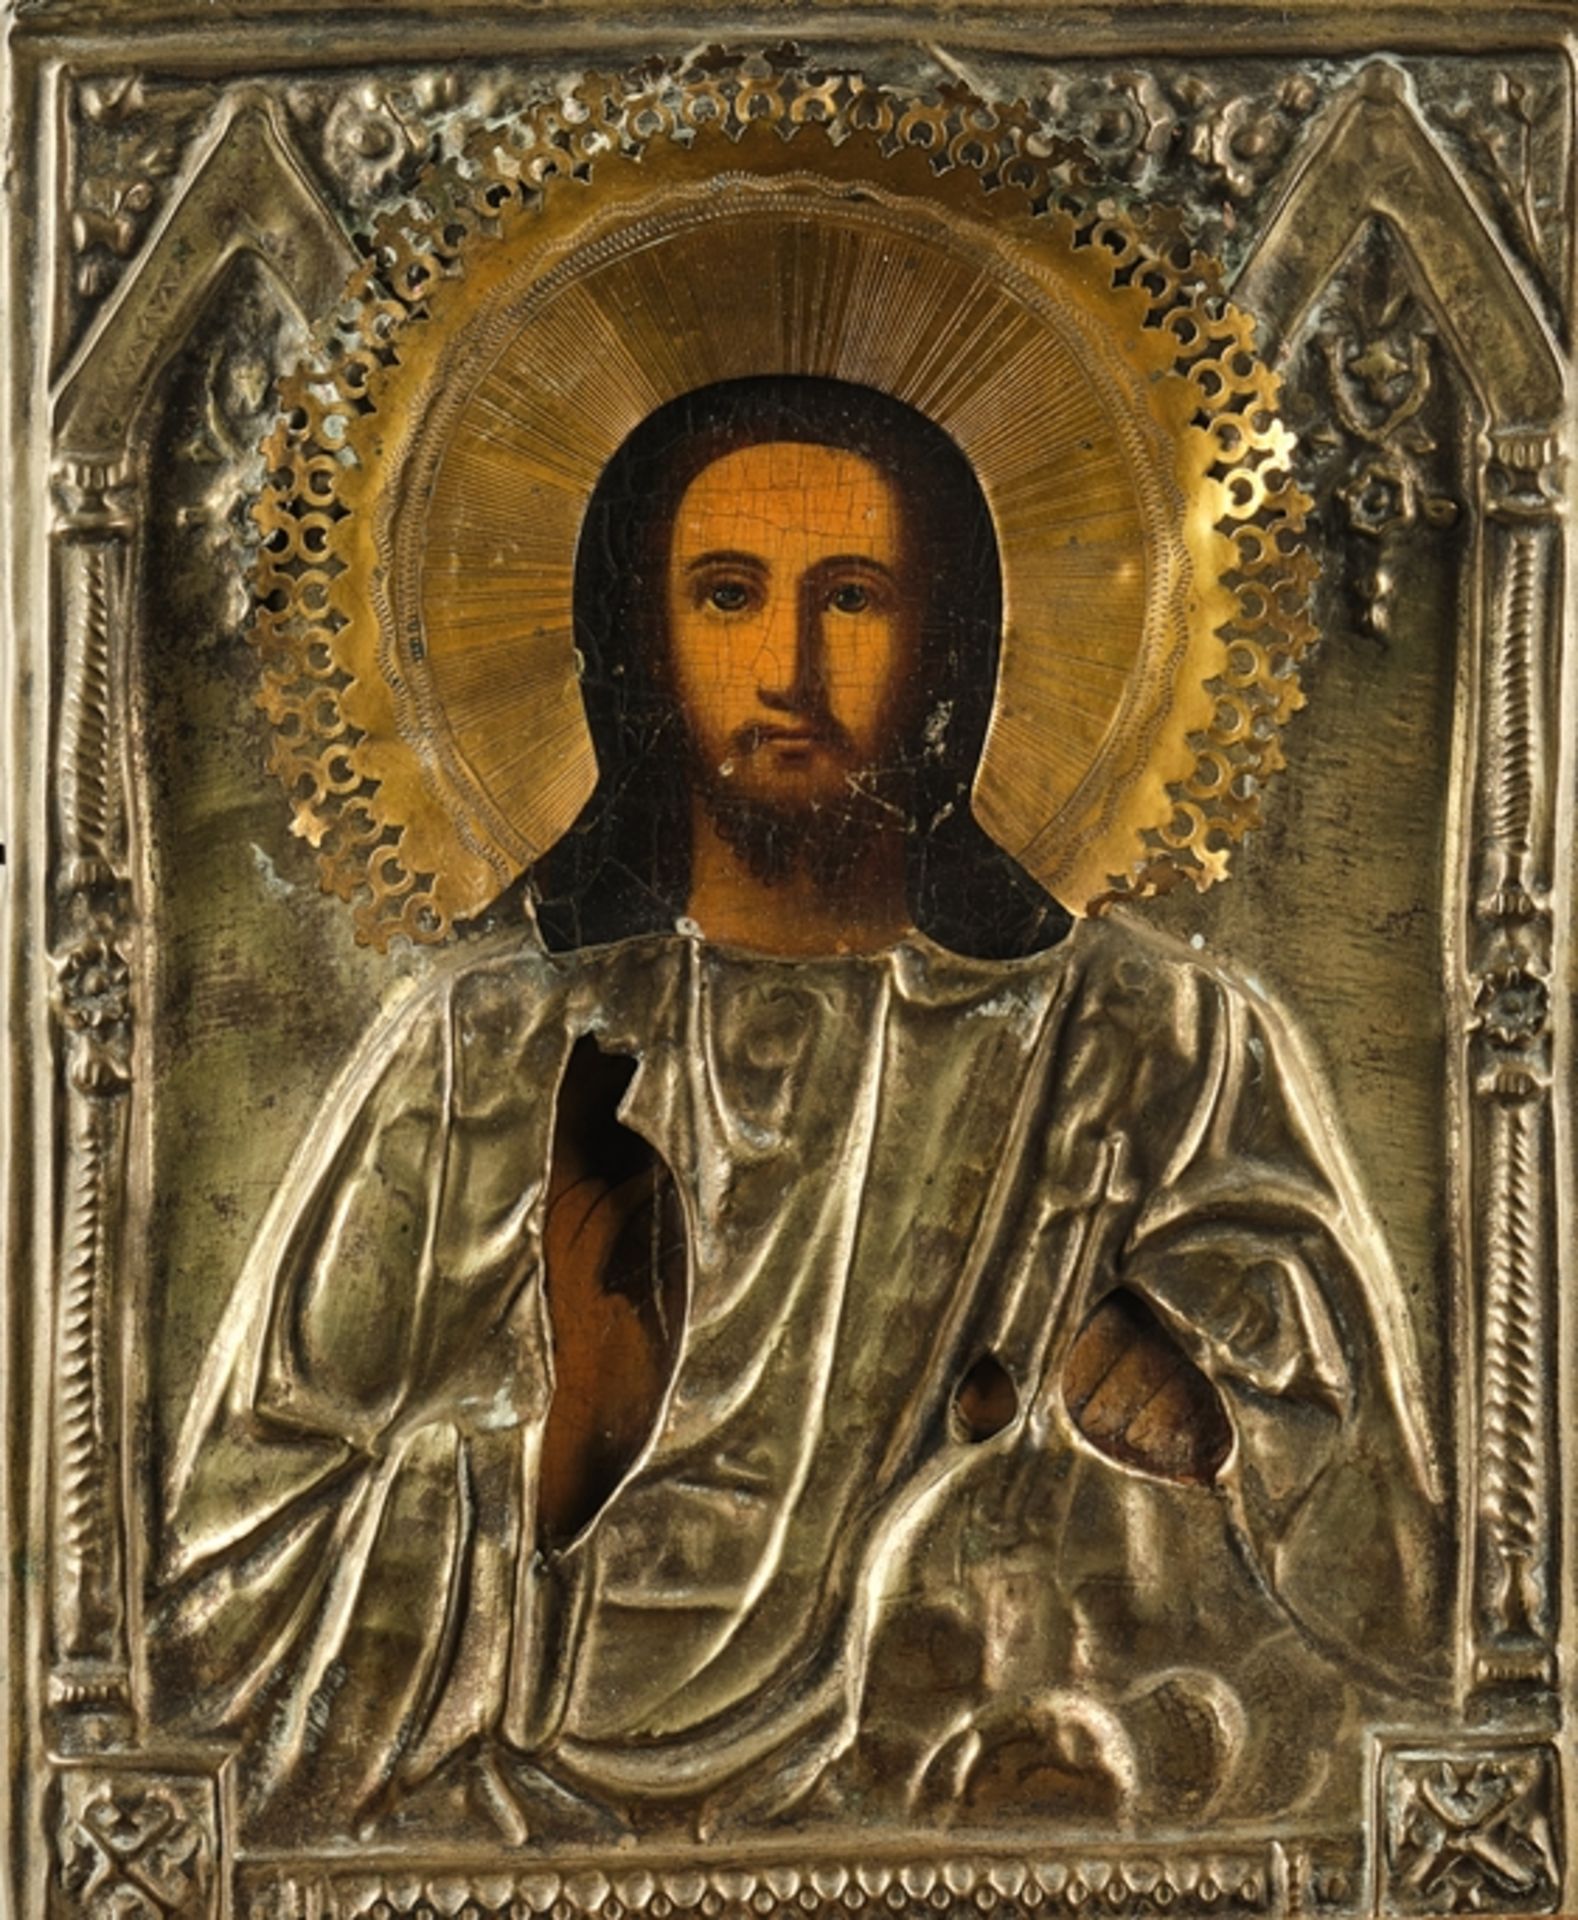 Ikone, Tempera auf Holz, Messingoklad, "Christus Pantokrator", 19. Jh., 23 x 18.5 cm, übergangen